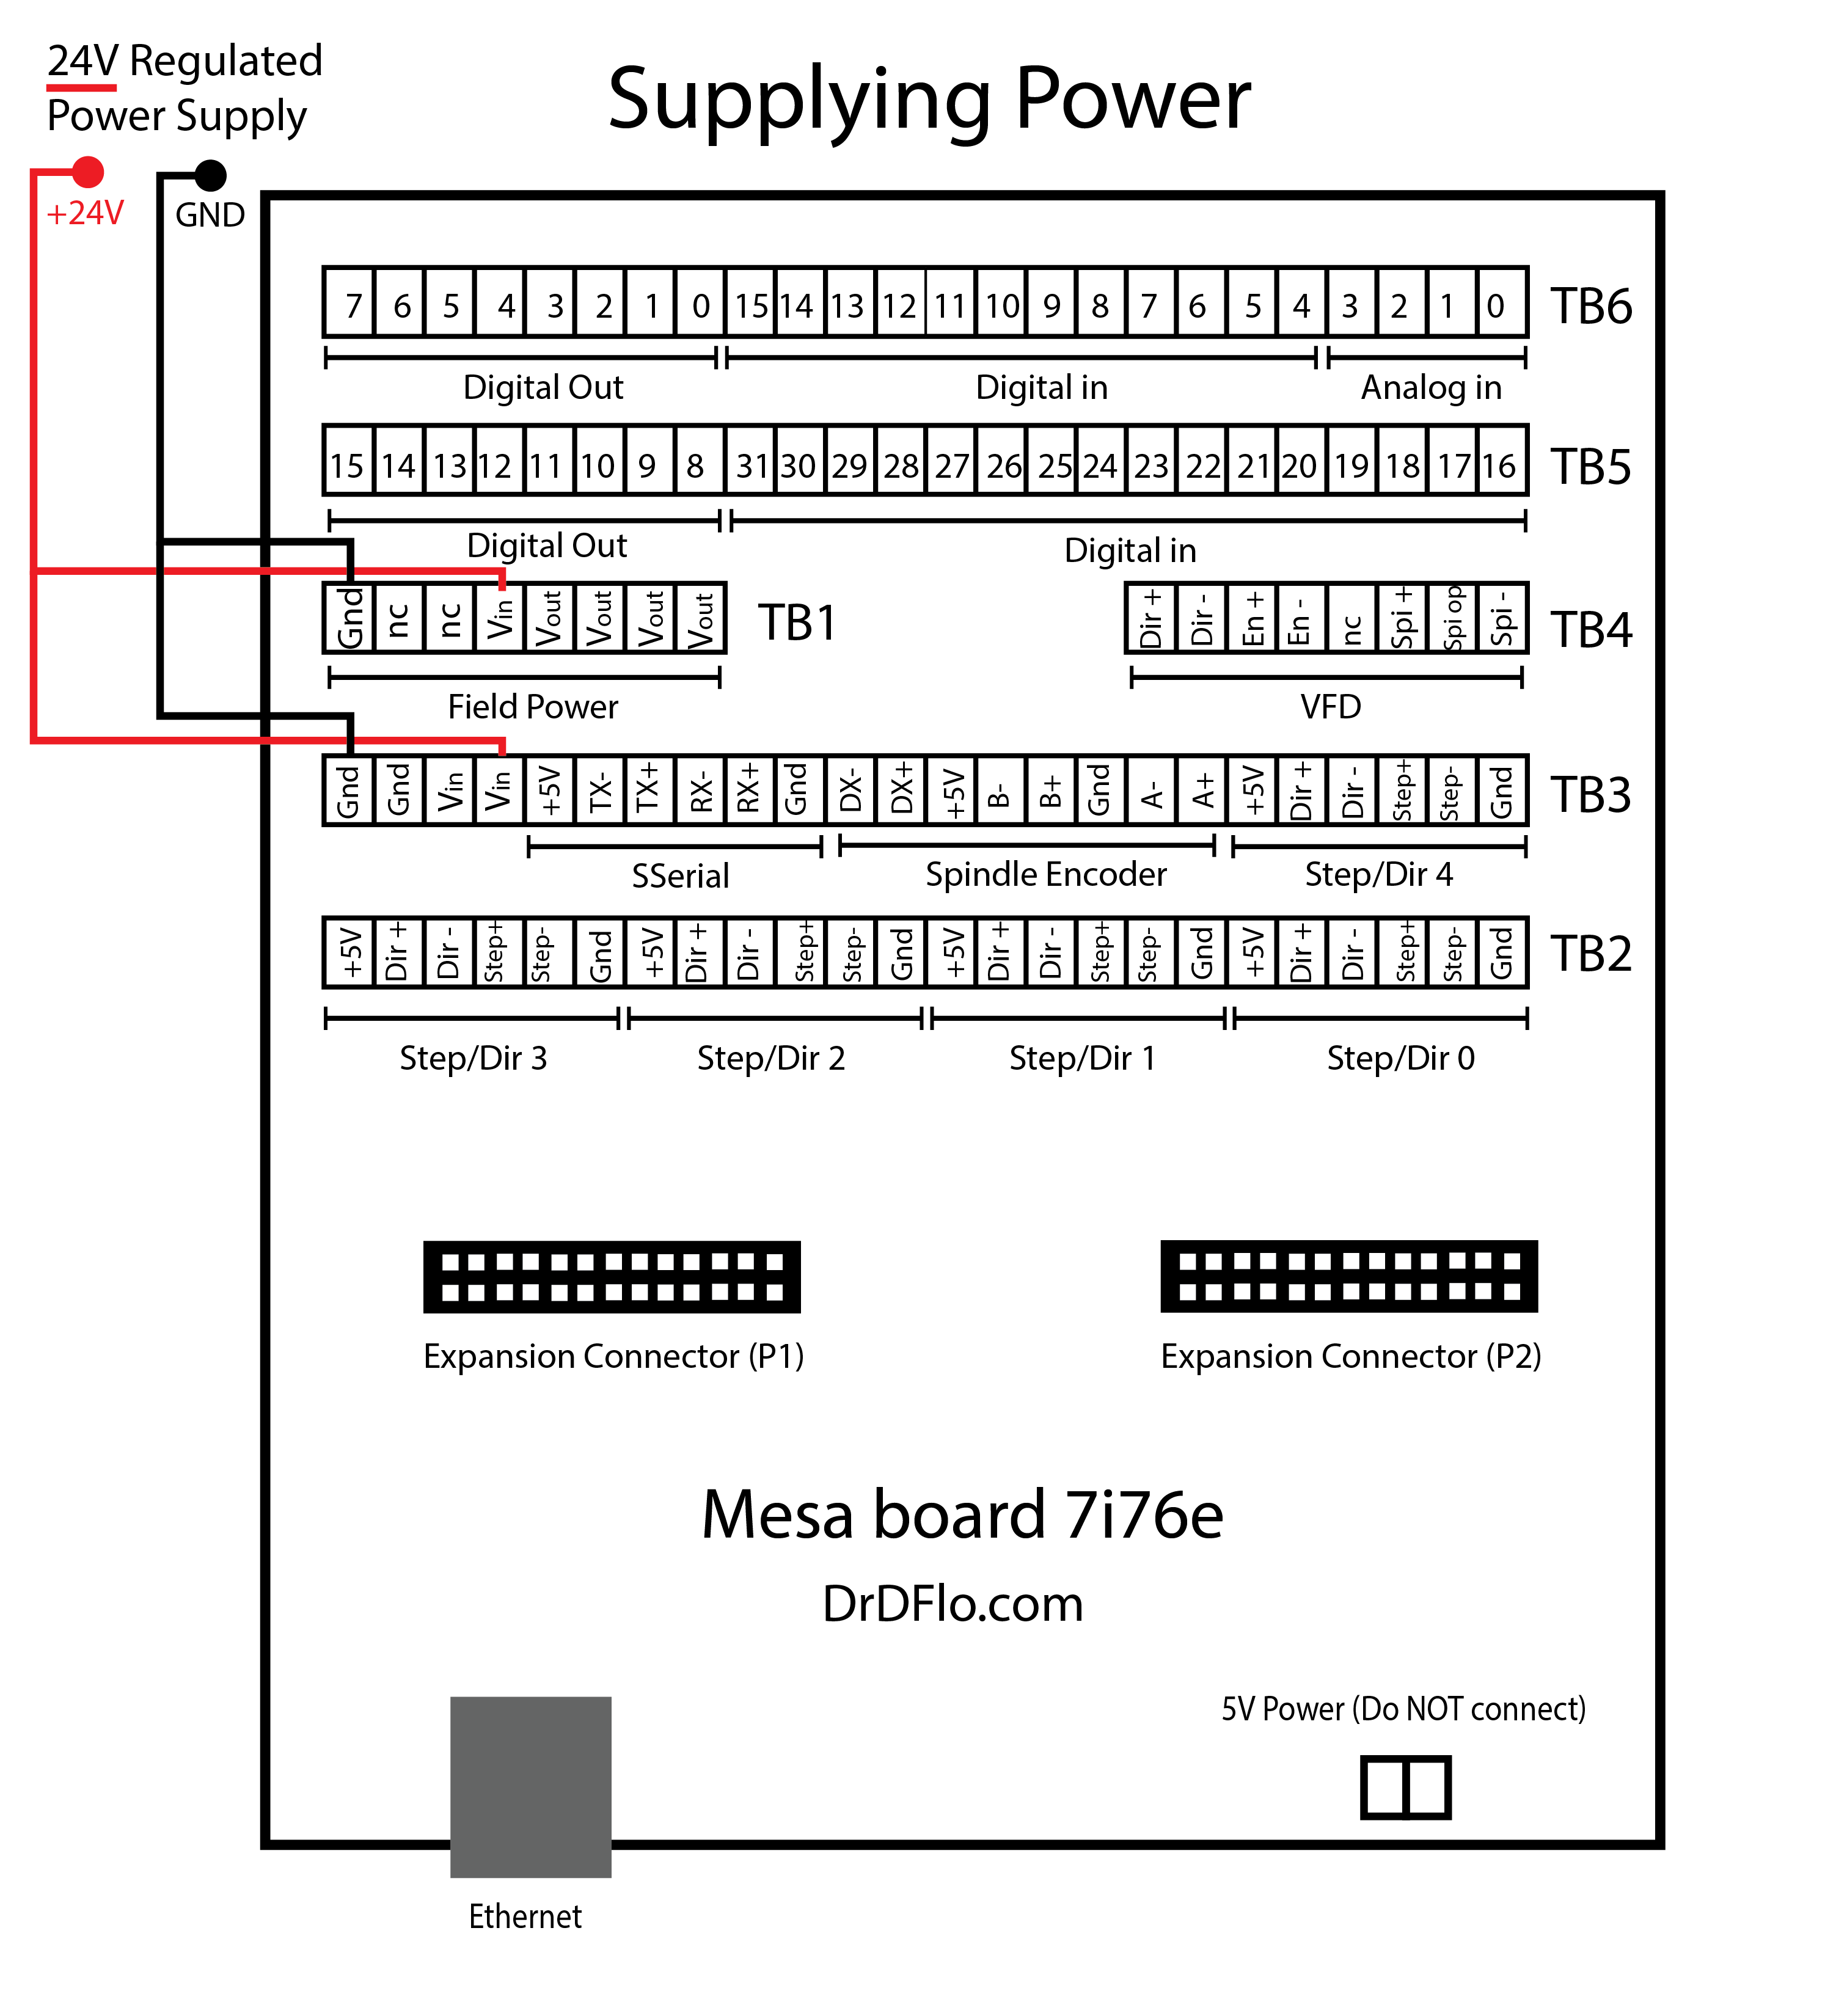 Mesa 7i76e pinout/wiring and power supply